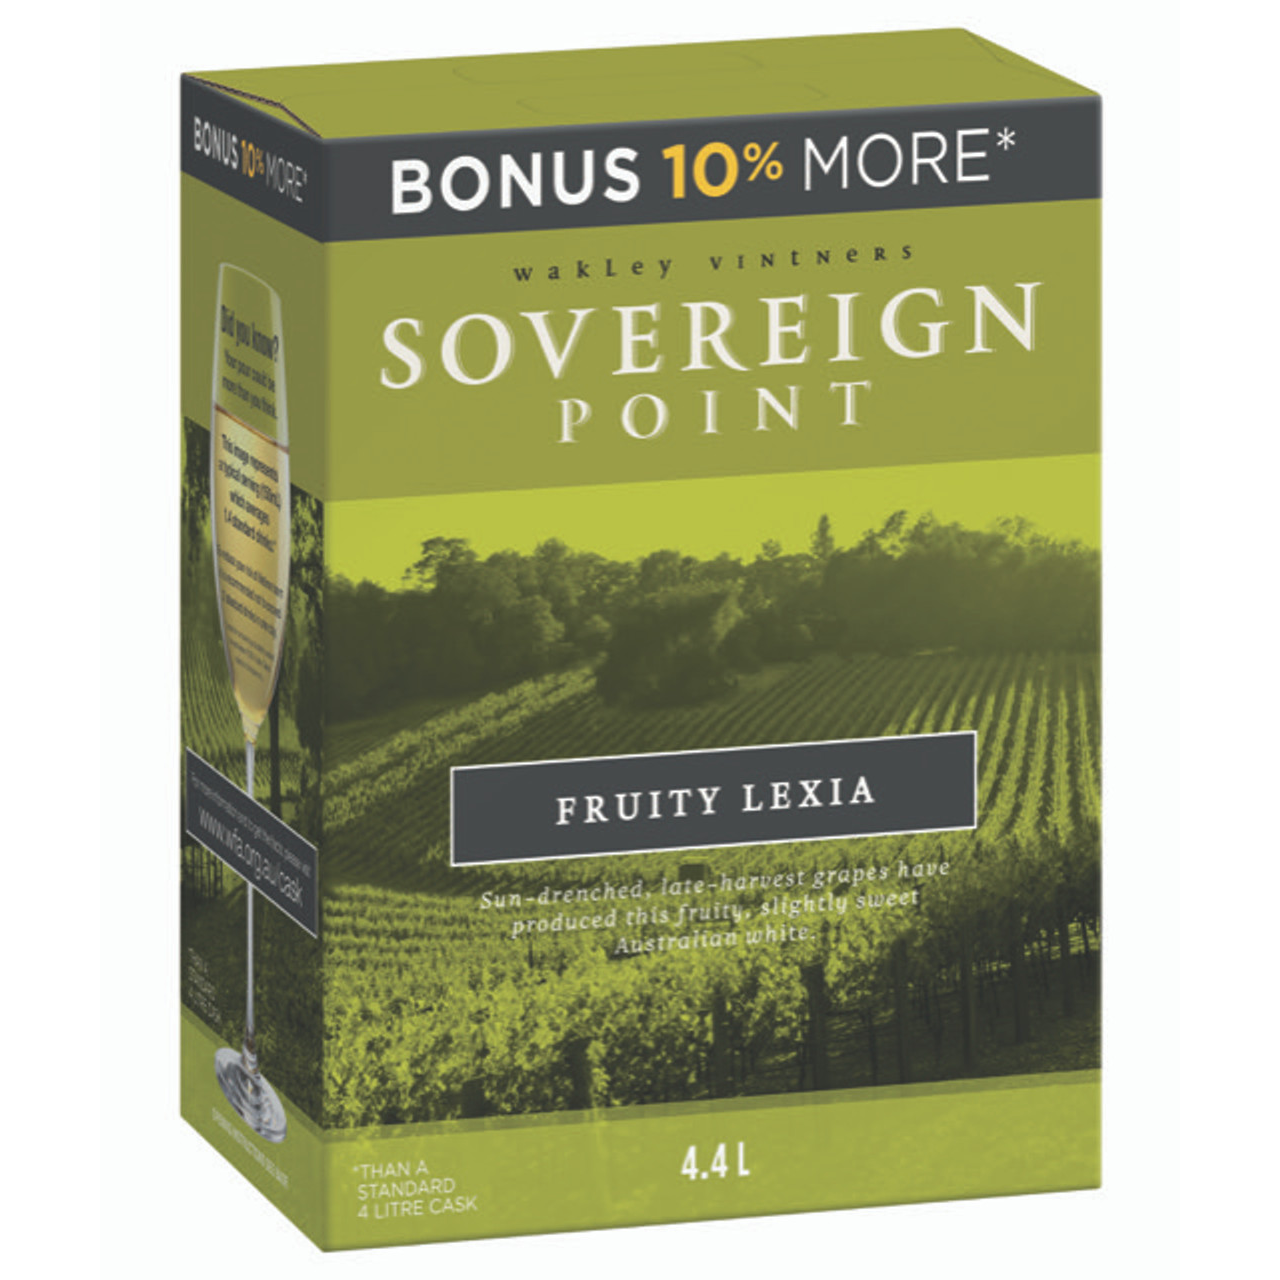 Sovereign Point Fruity Lexia 4.4L